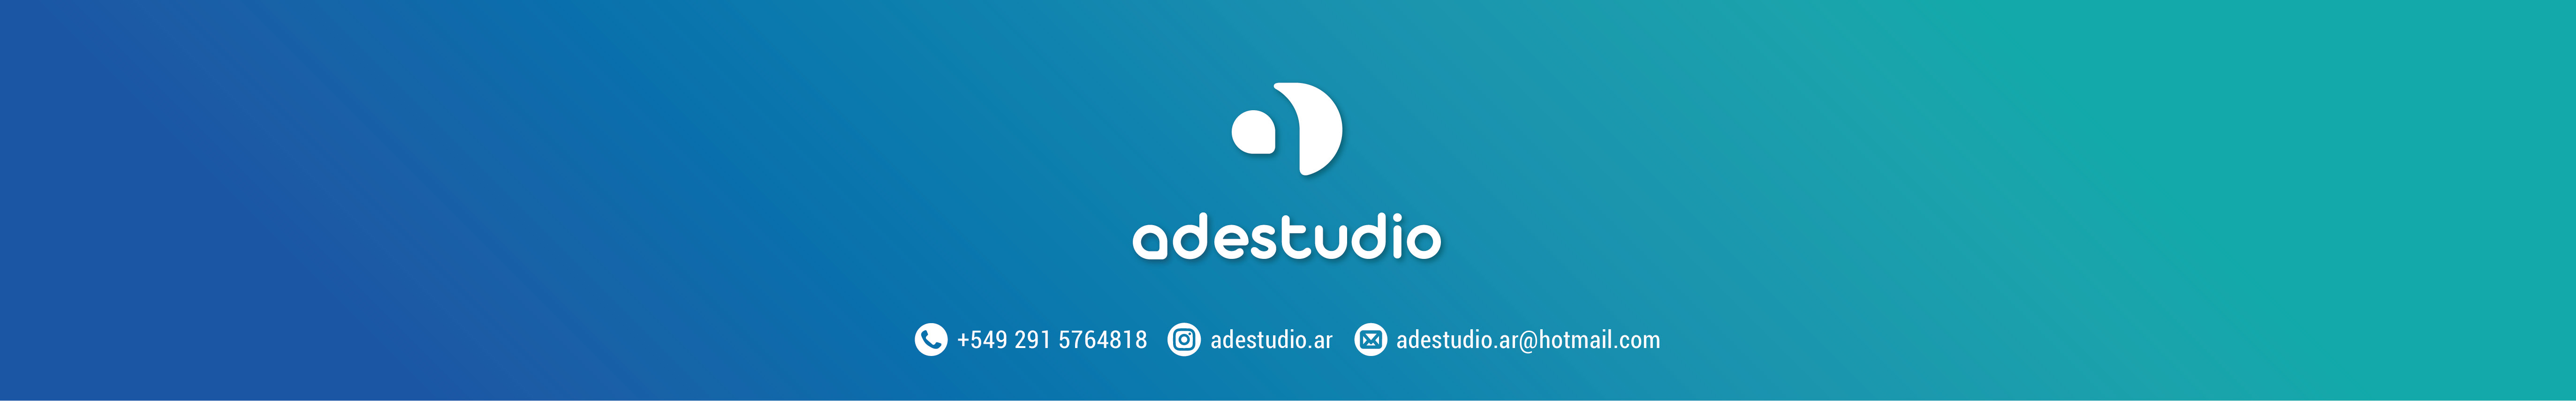 AD Estudio's profile banner